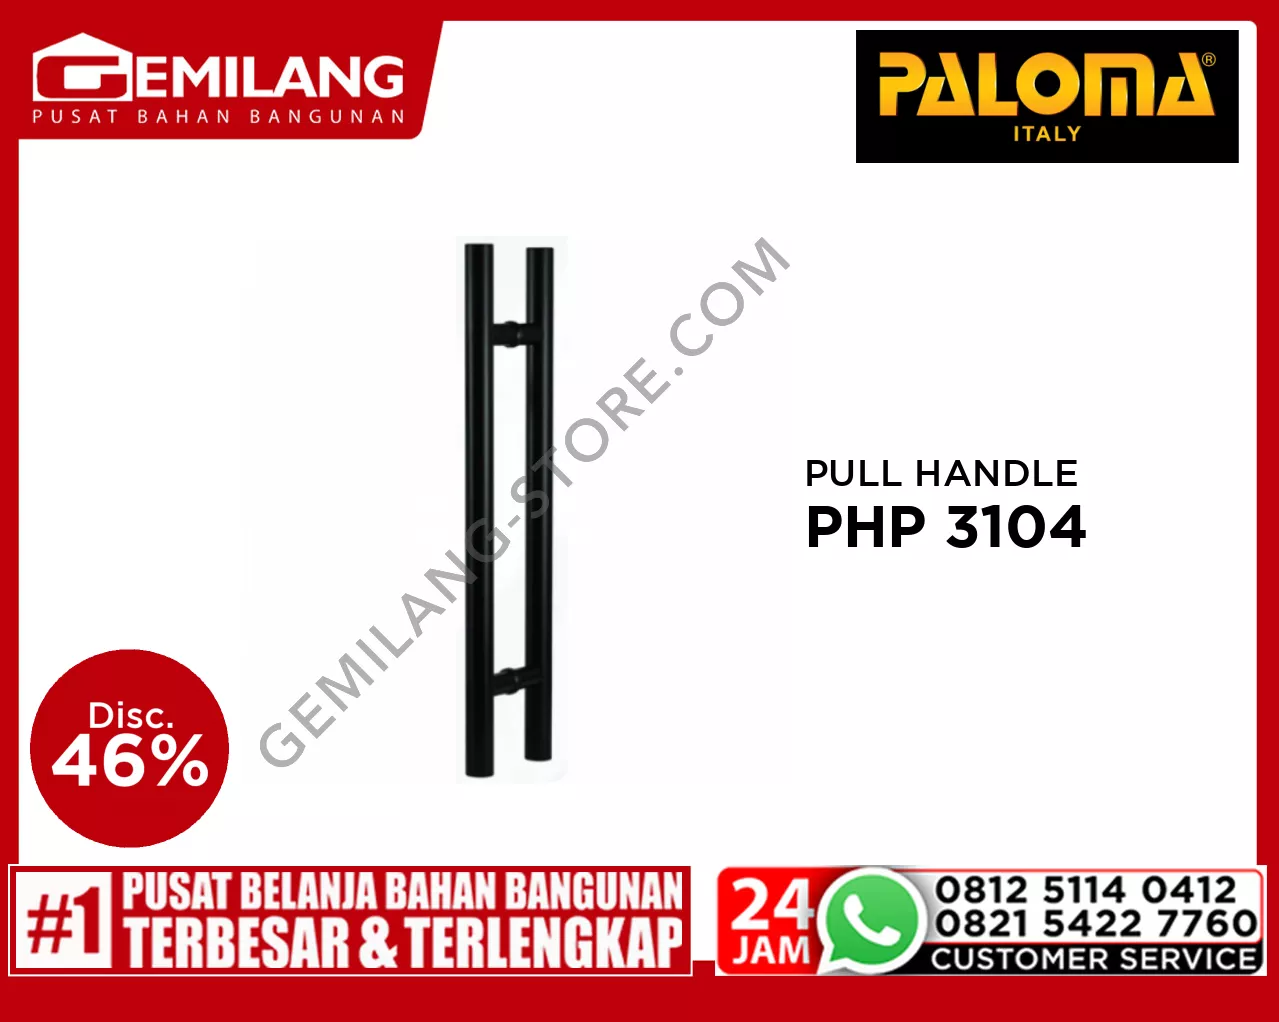 PALOMA PULL HANDLE CAVANA FINISH MATTE BLACK 600mm PHP 3104